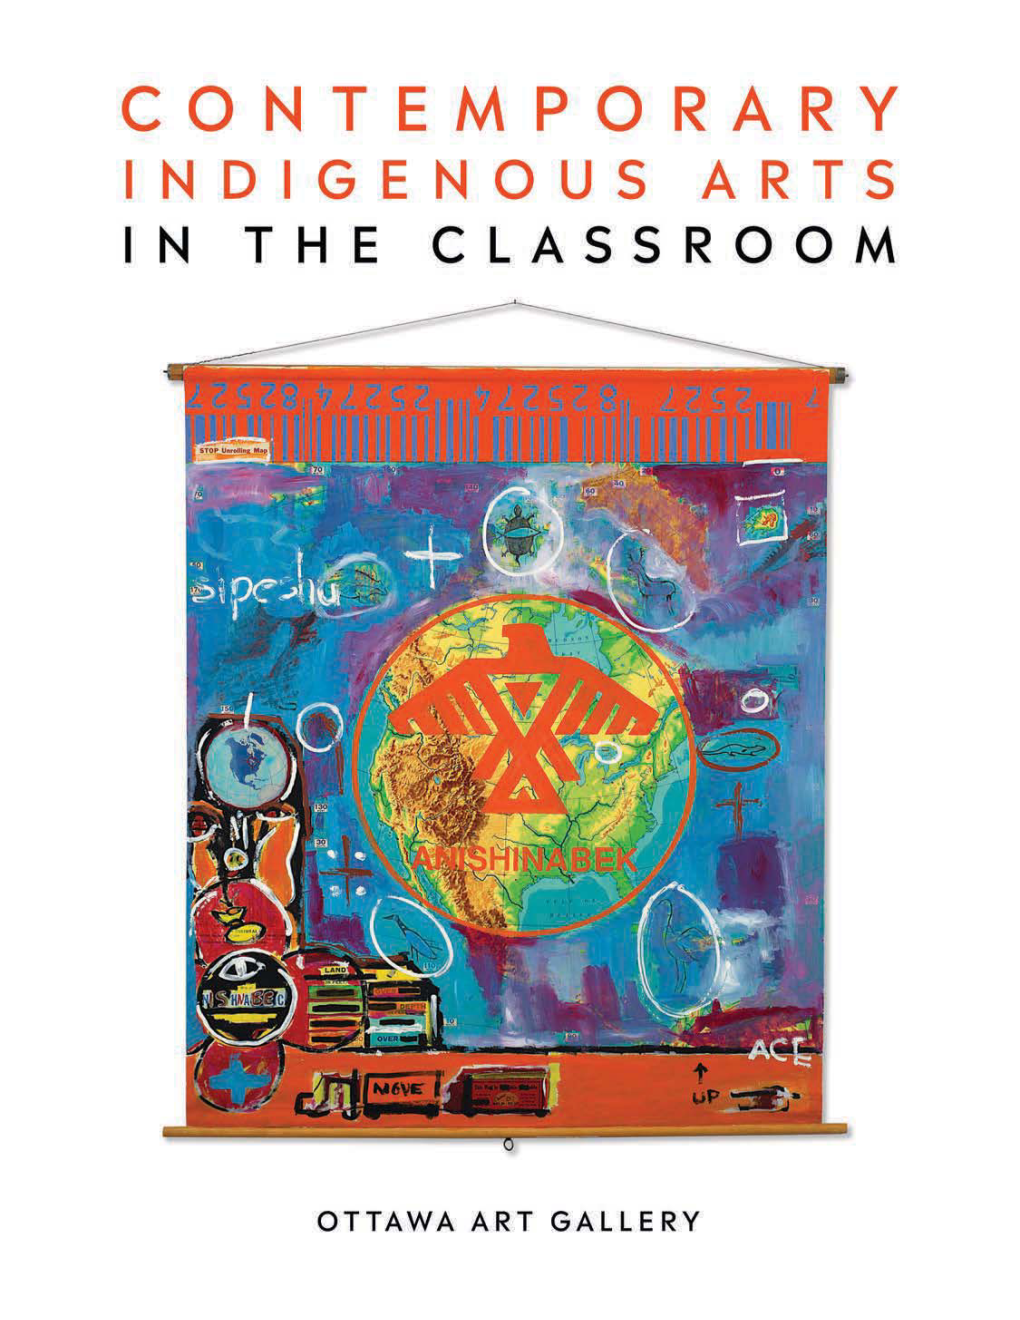 PDF Version of Contemporary Indigenous Arts